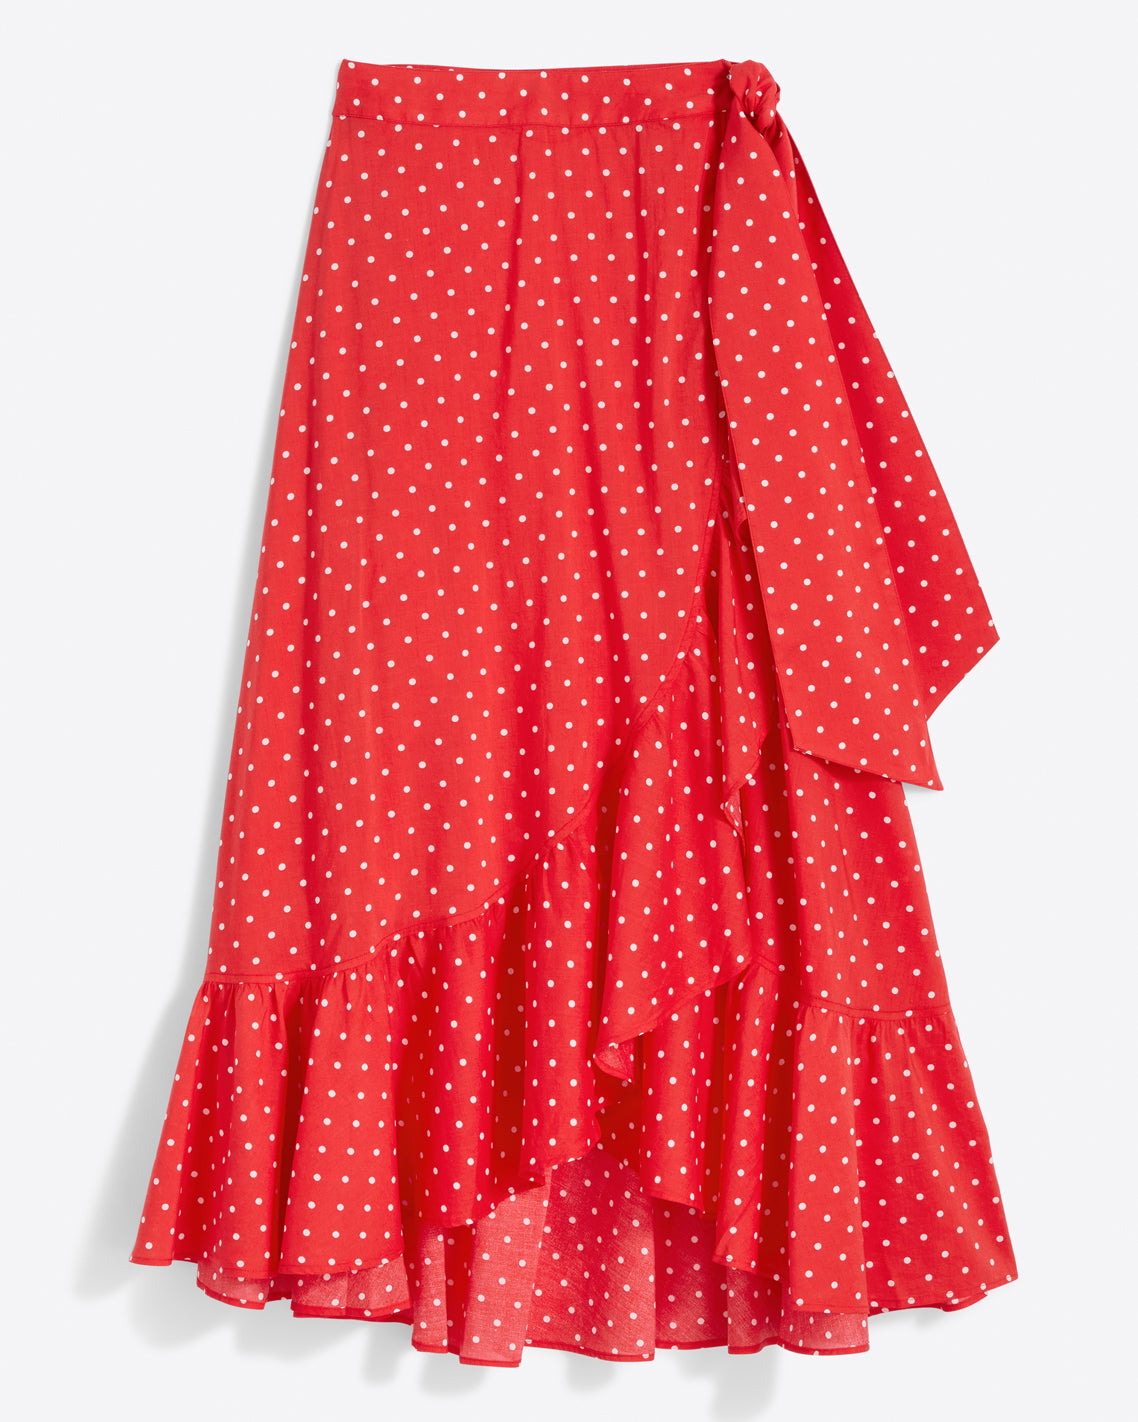 Ruffled Wrap Skirt in Red Polka Dot